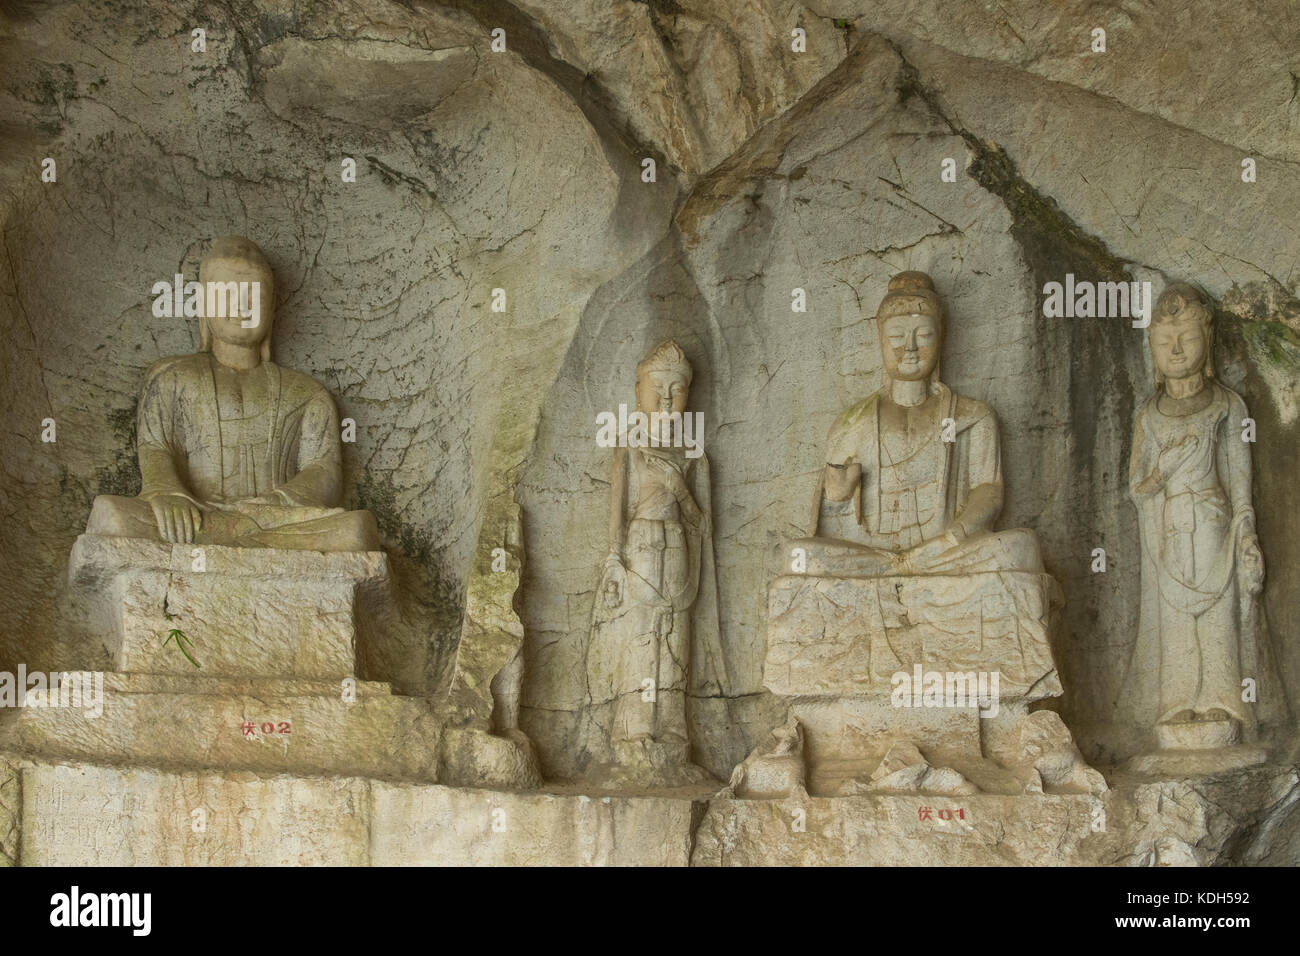 Stein gehauenen Buddhas, fubo Berg, Guilin, Guangxi, China Stockfoto